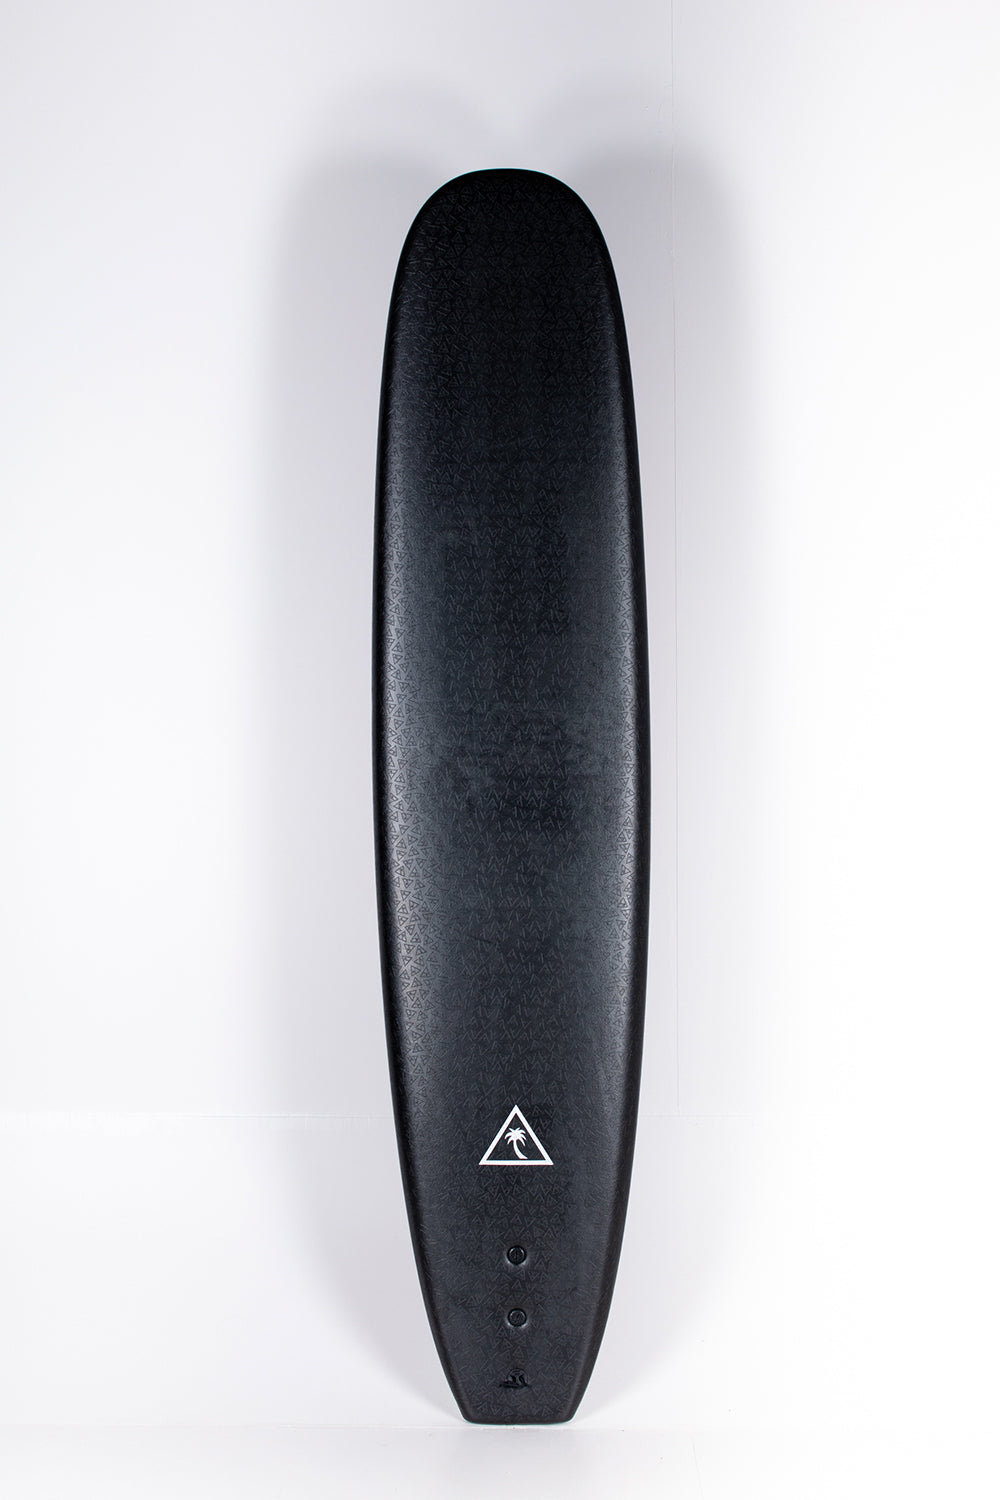 Pukas Surf Shop - Catch Surf - NOSERIDER SINGLE FIN Black Turquoise - 8'6